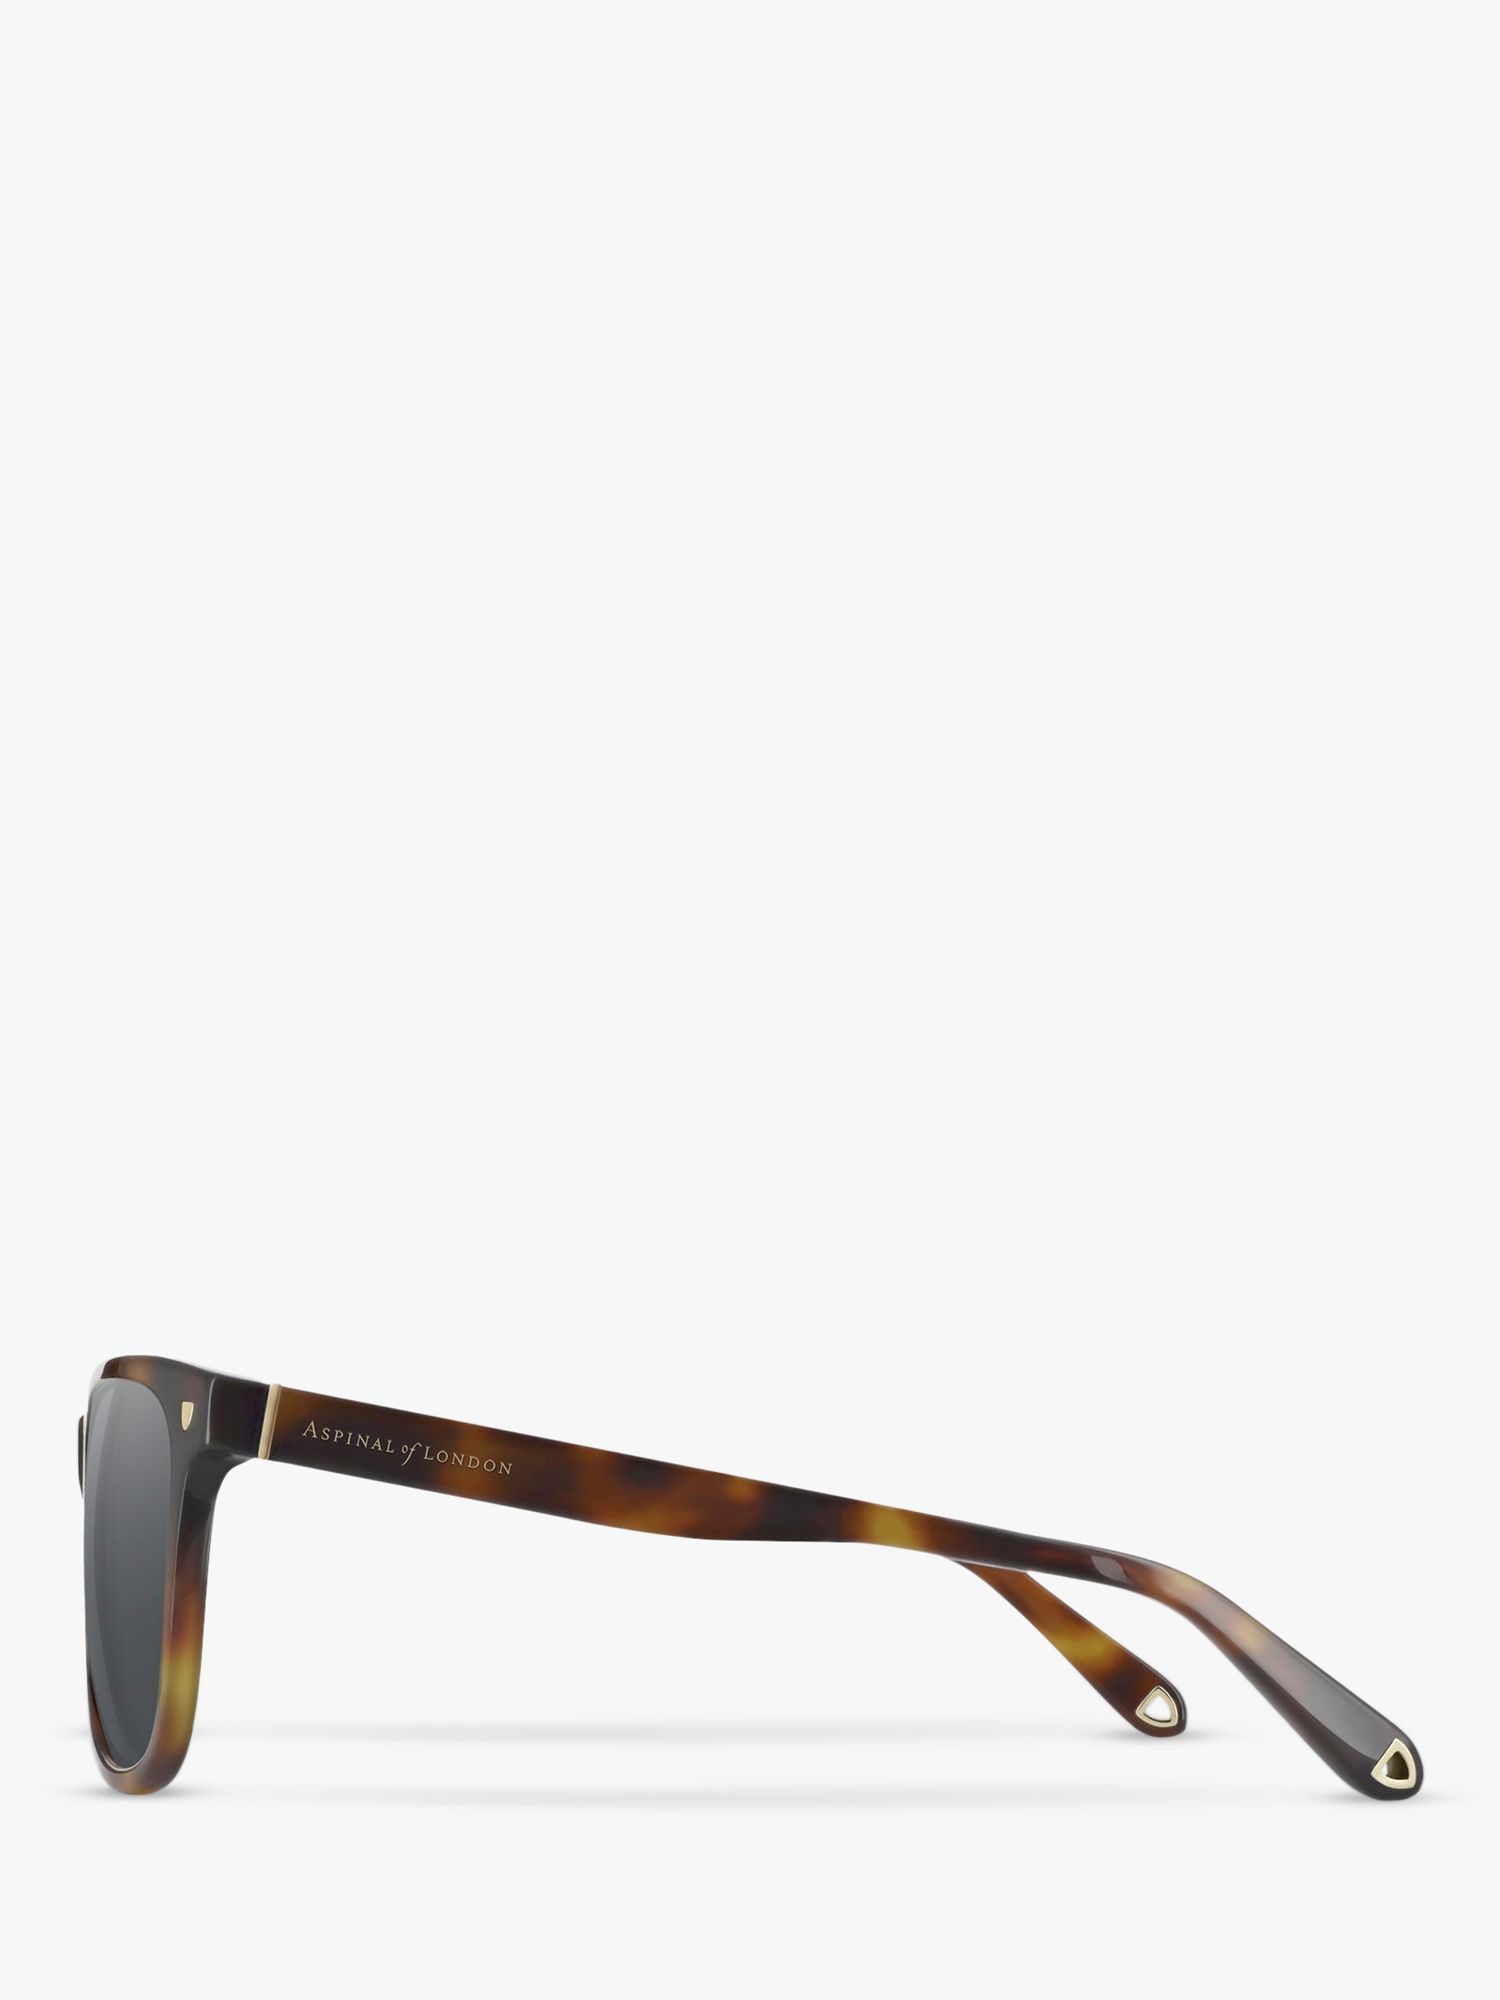 Aspinal of London Men's Milano D-Frame Sunglasses, Tortoiseshell